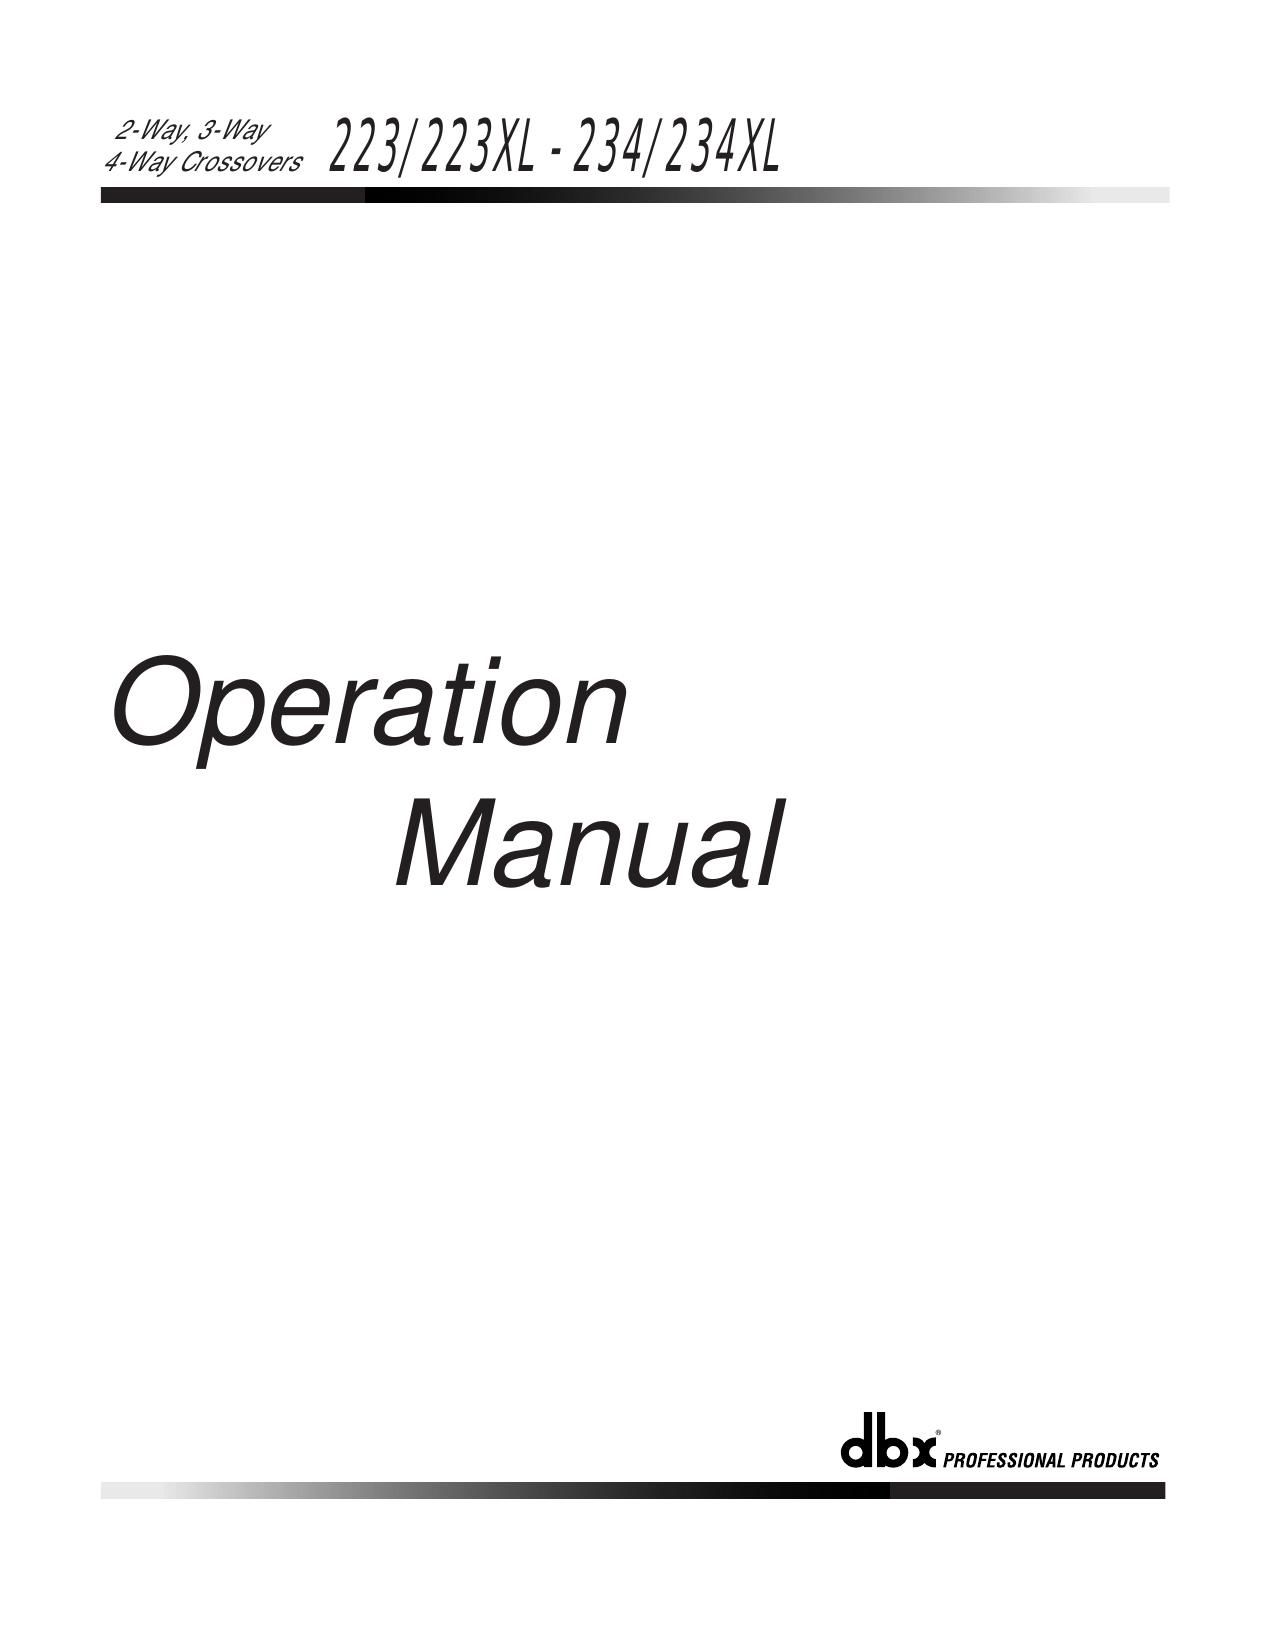 Dbx 223 223 XL 234 234 XL Owners Manual